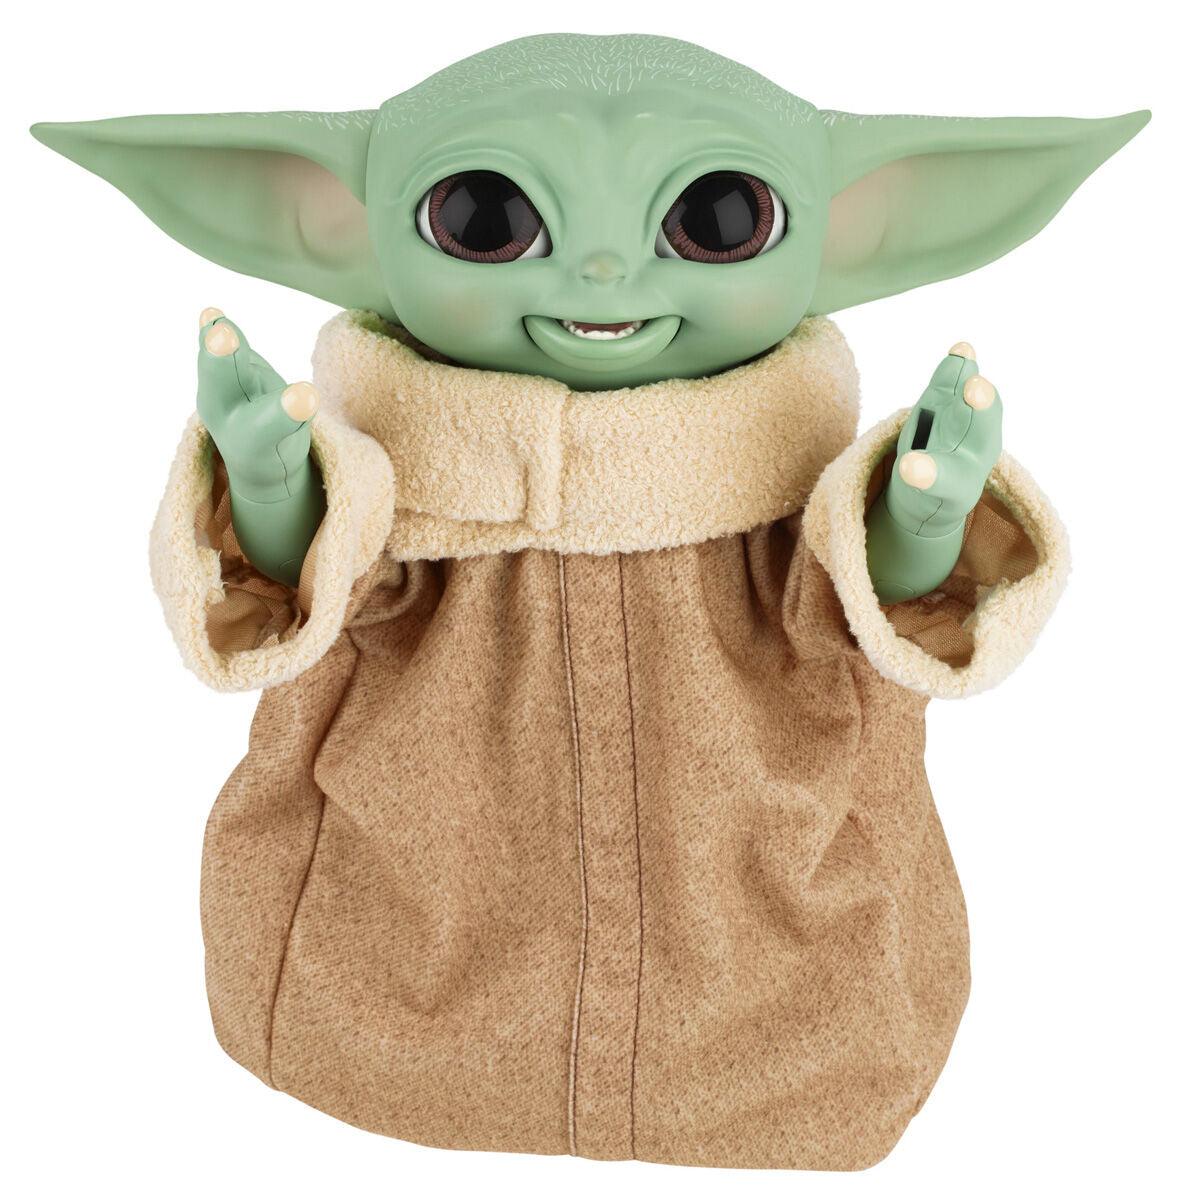 Star Wars Mandalorian Baby Yoda The Child Animatronic Electronic Figure - Hasbro - Ginga Toys